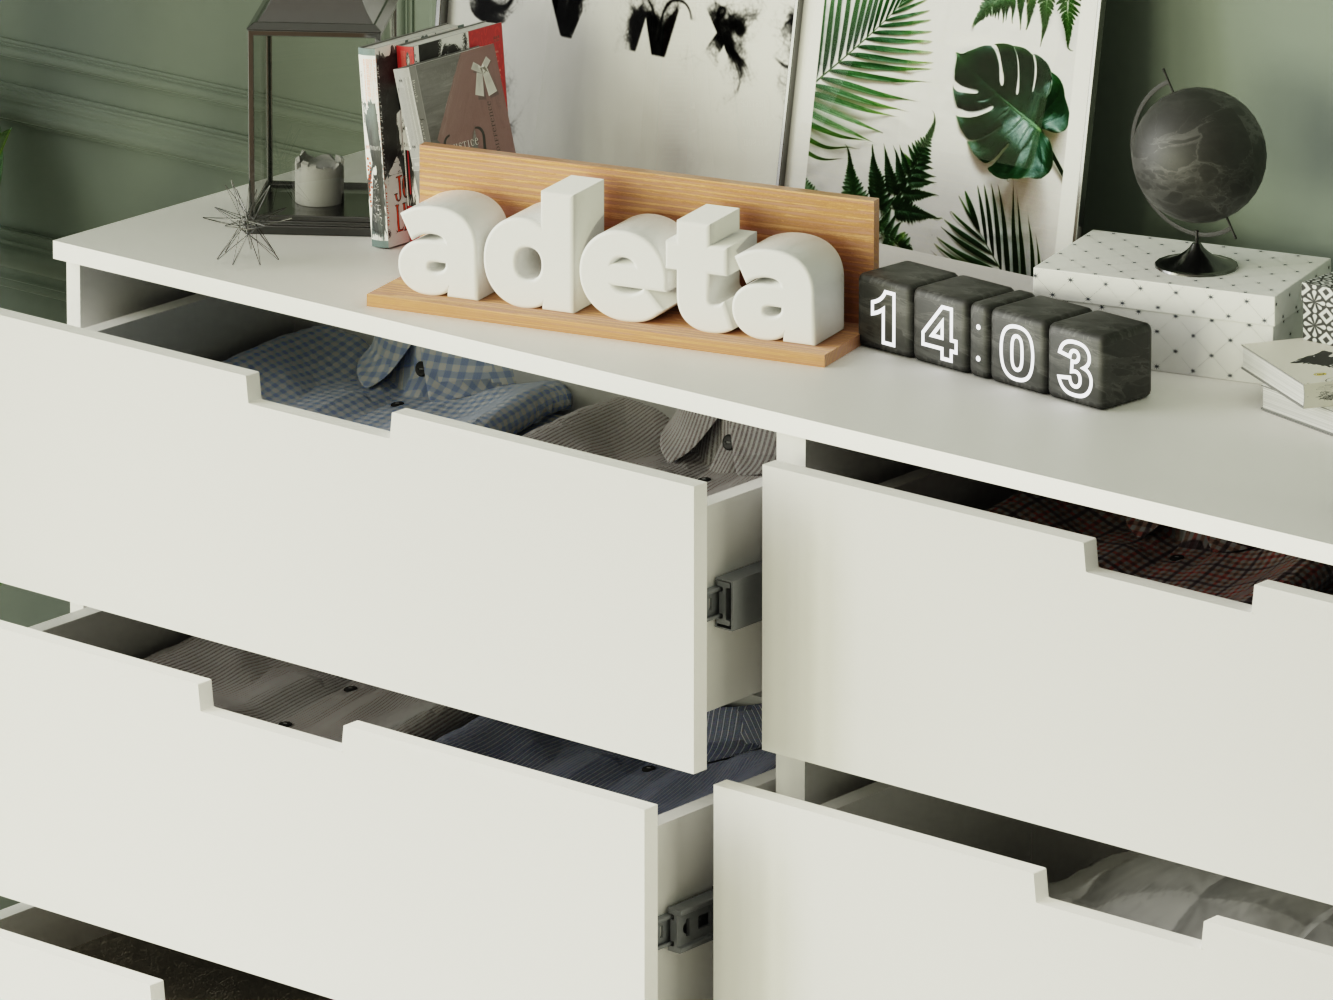 Изображение товара Комод Нордли 13 white ИКЕА (IKEA), 120x45x90 см на сайте adeta.ru